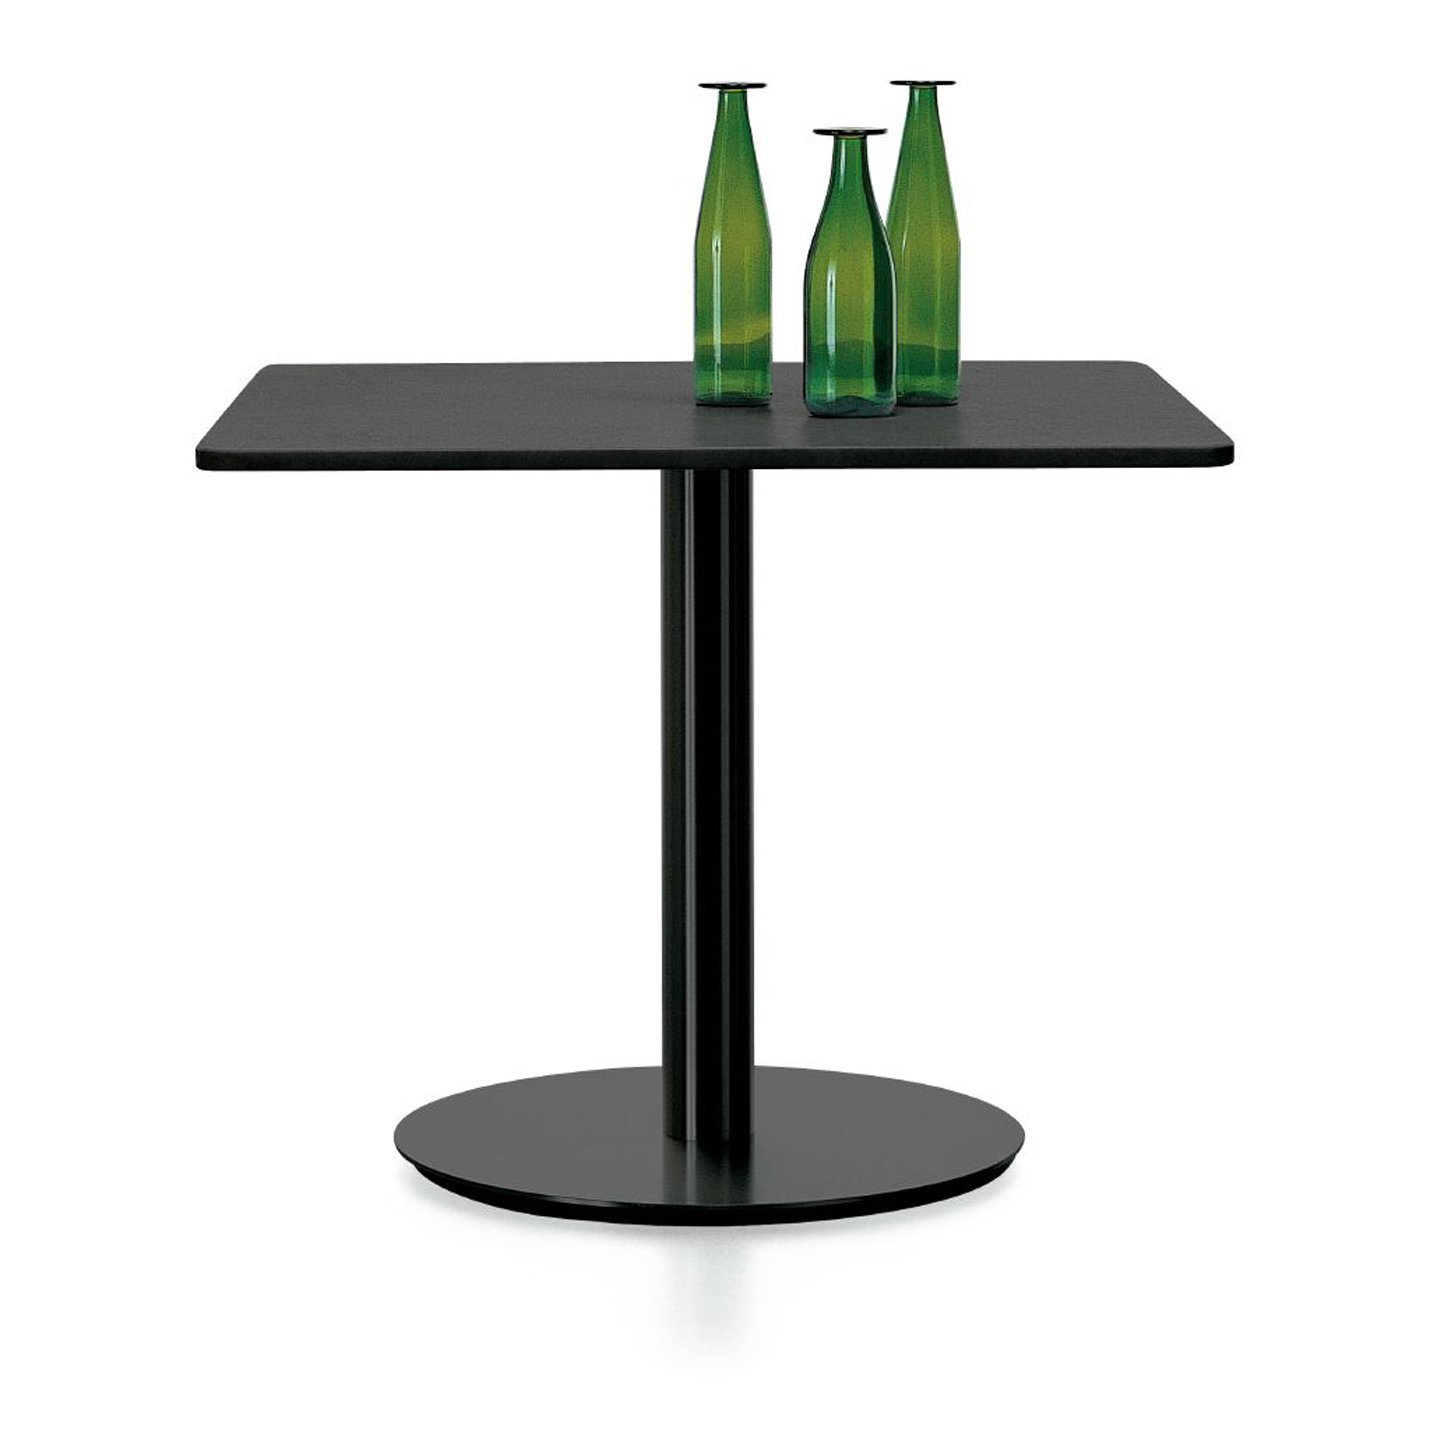 Haworth Break table with circular black base and rectangular black top